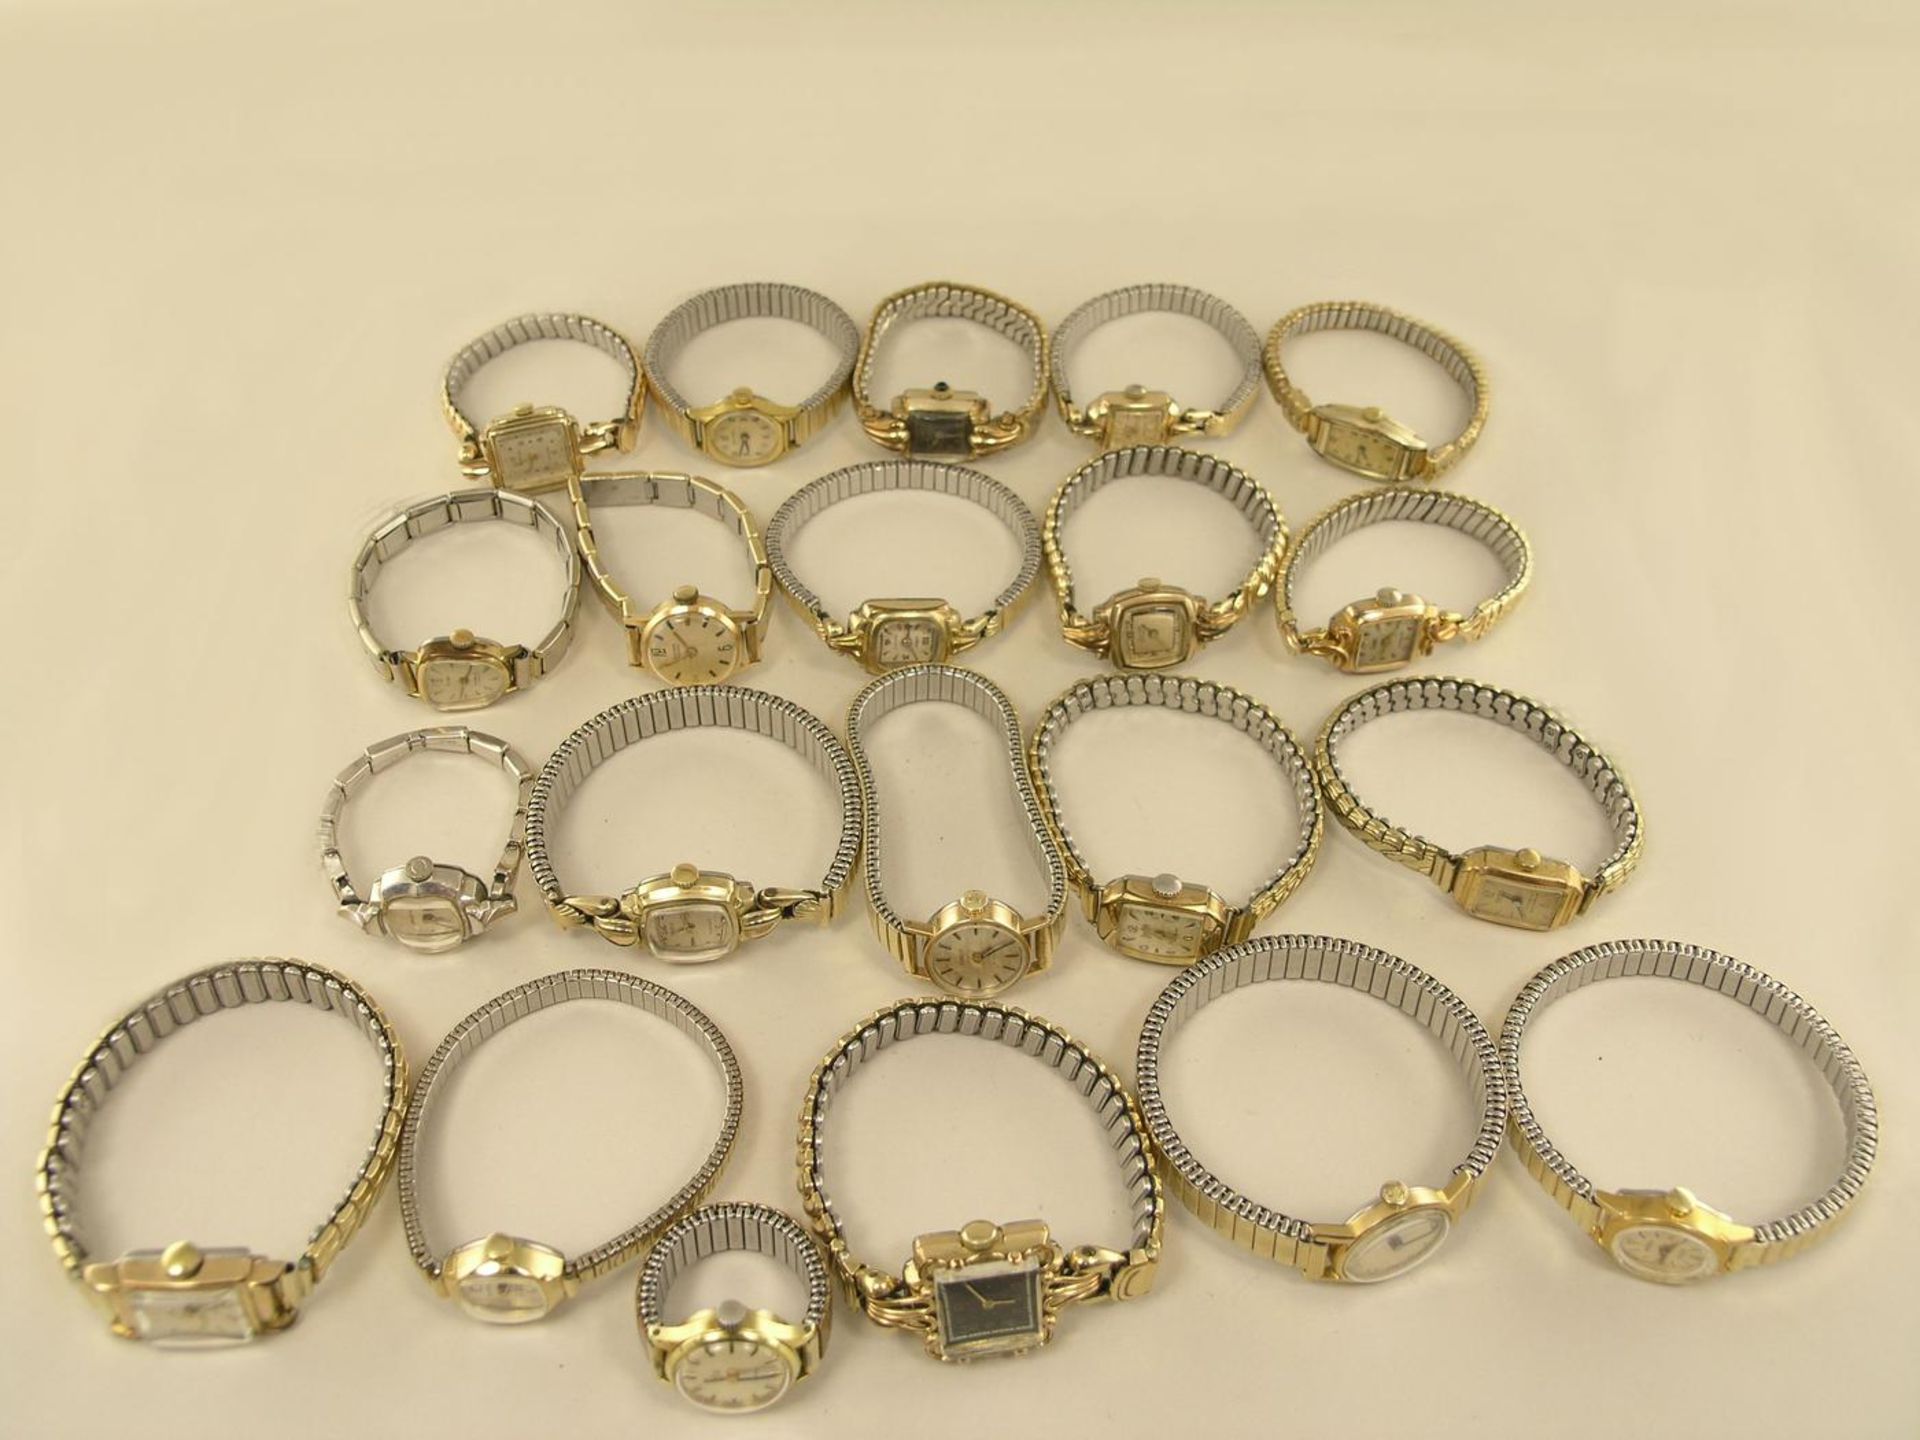 Armbanduhr: großes Konvolut vintage Damenuhren, 50er/60er Jahre 20 Armbanduhren und 1 Ringuhr,